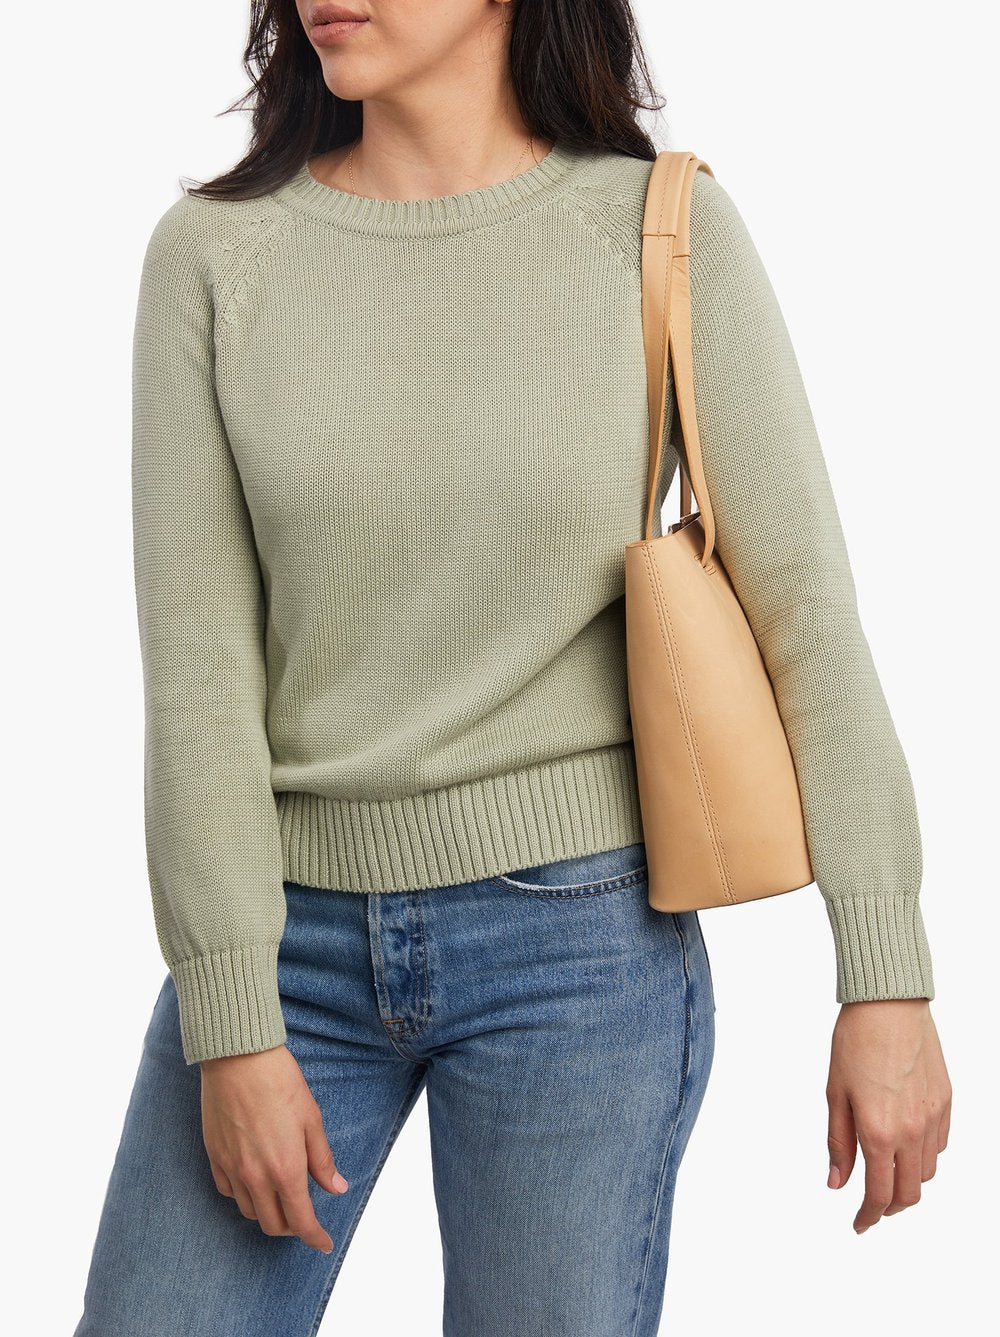 Nelita Shoulder Bag- Fawn